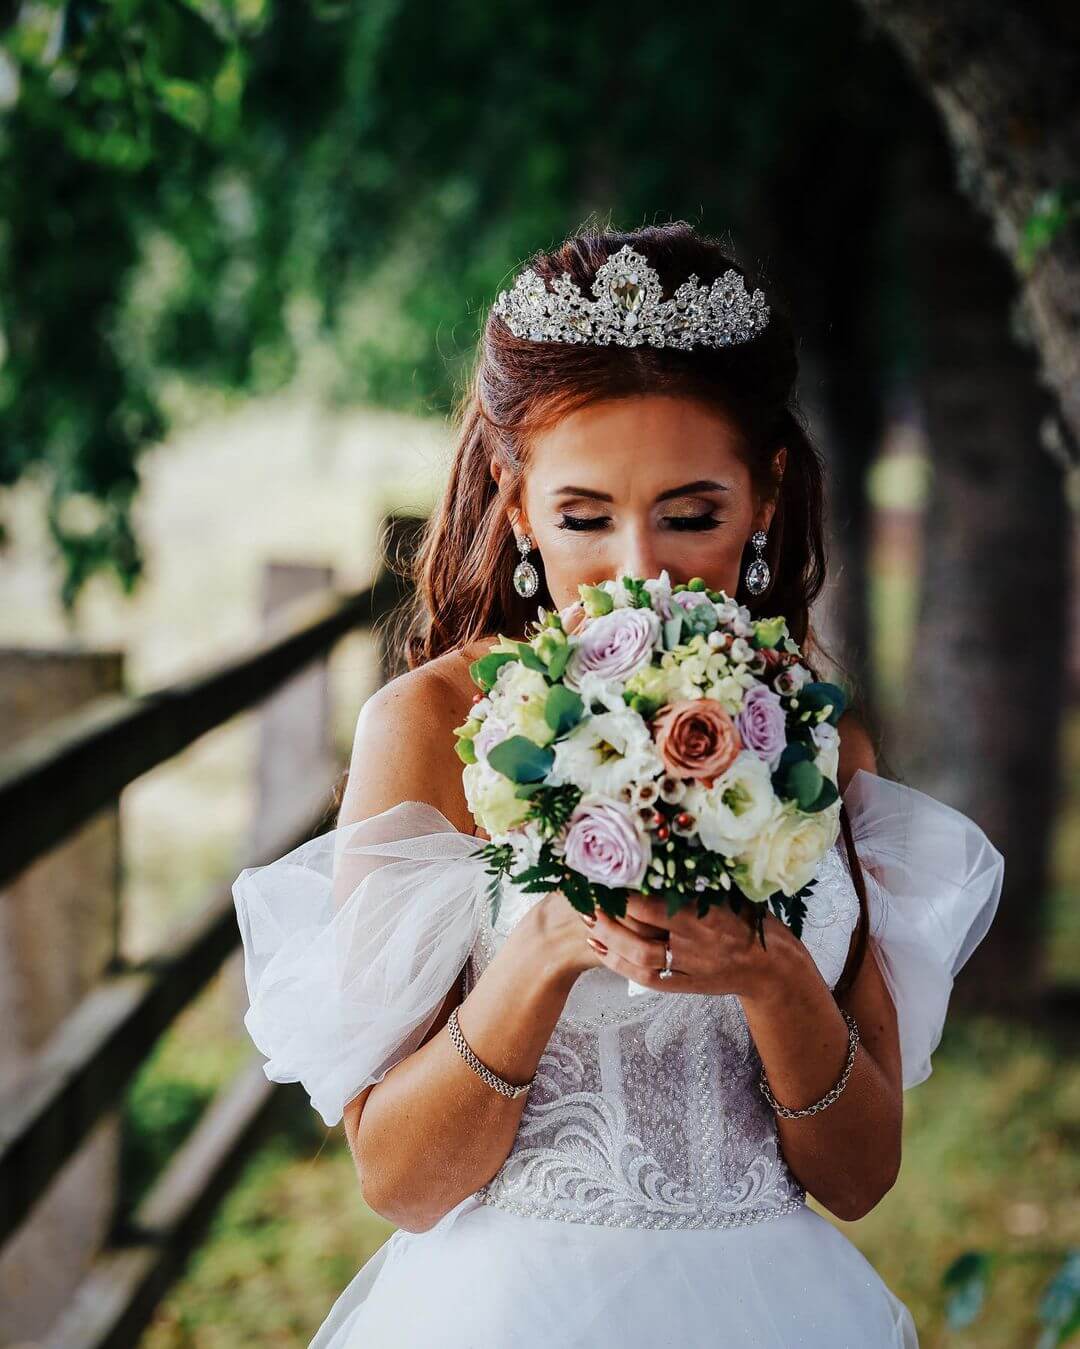 Western Wedding Bridal Crown Design Bridal Crown with Leaf-like Curves